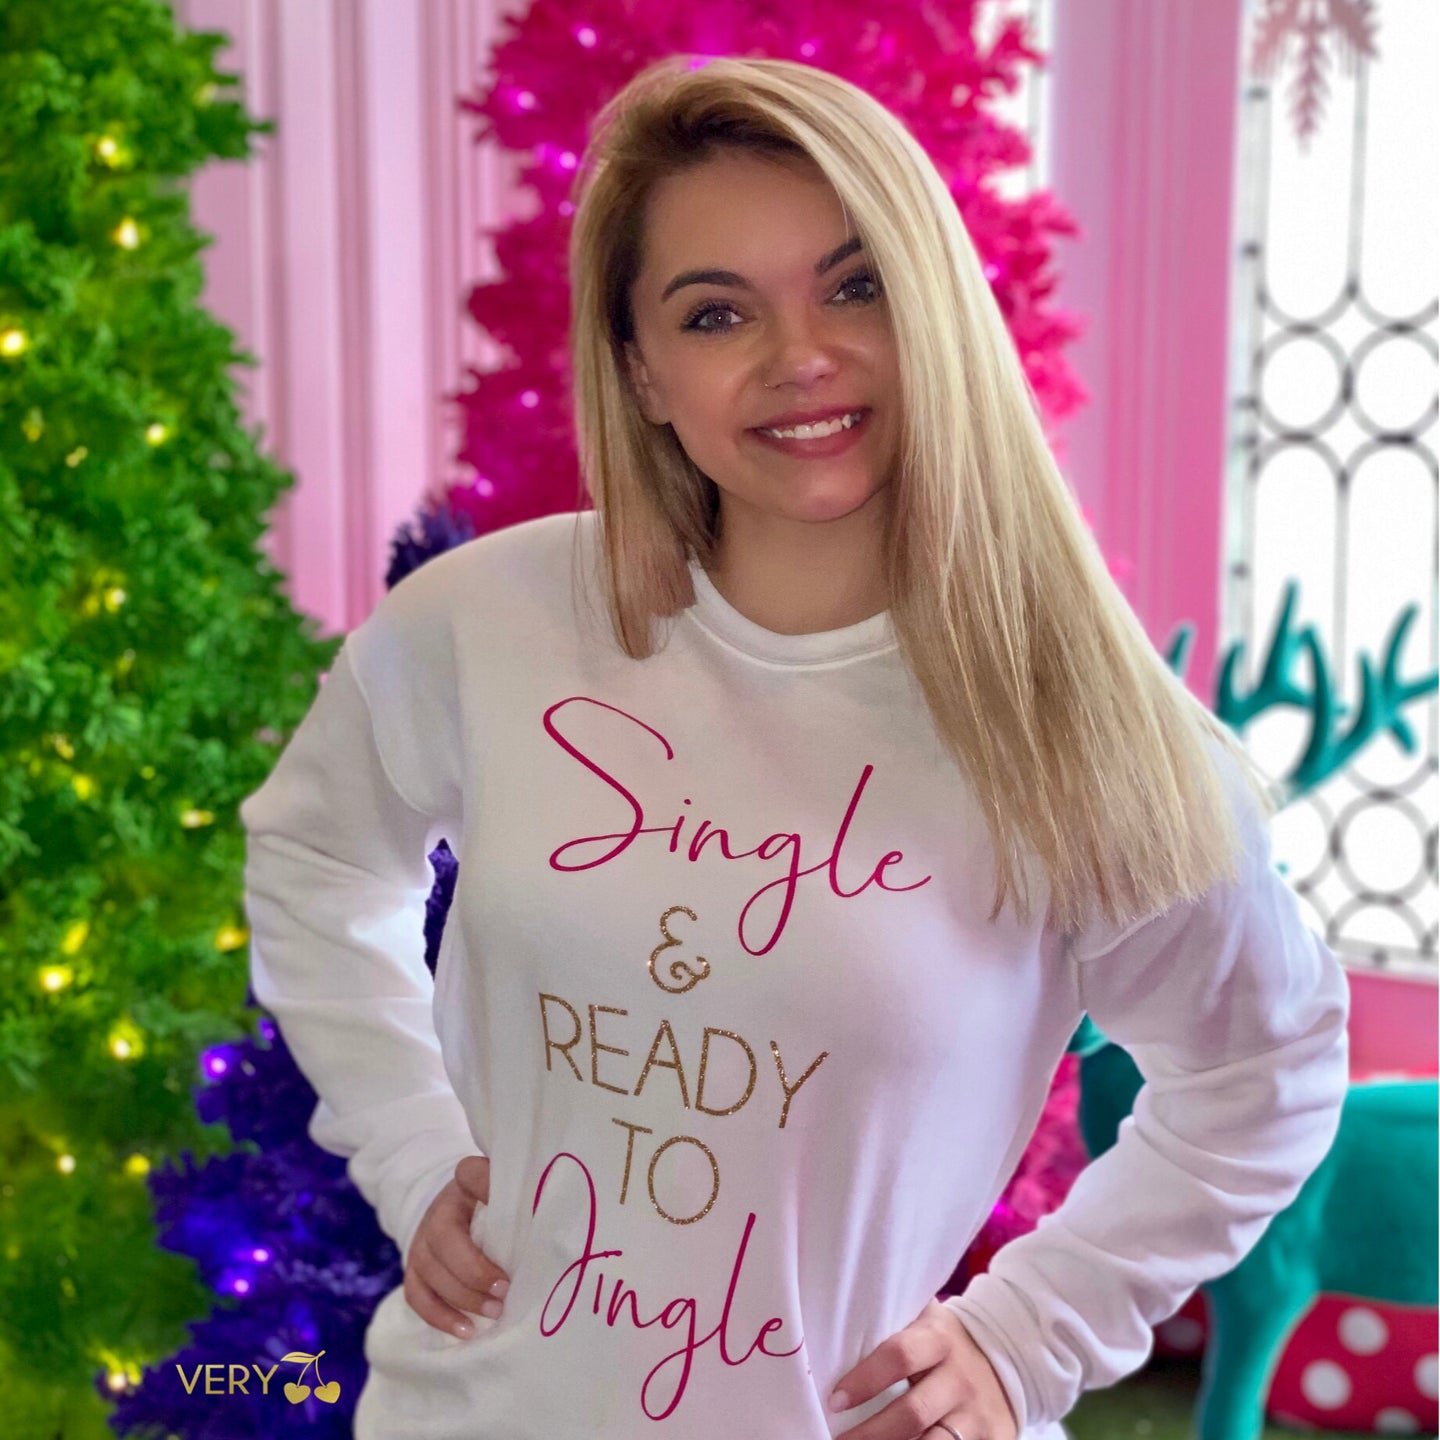 Single & Ready to Jingle Graphic Sweatshirt